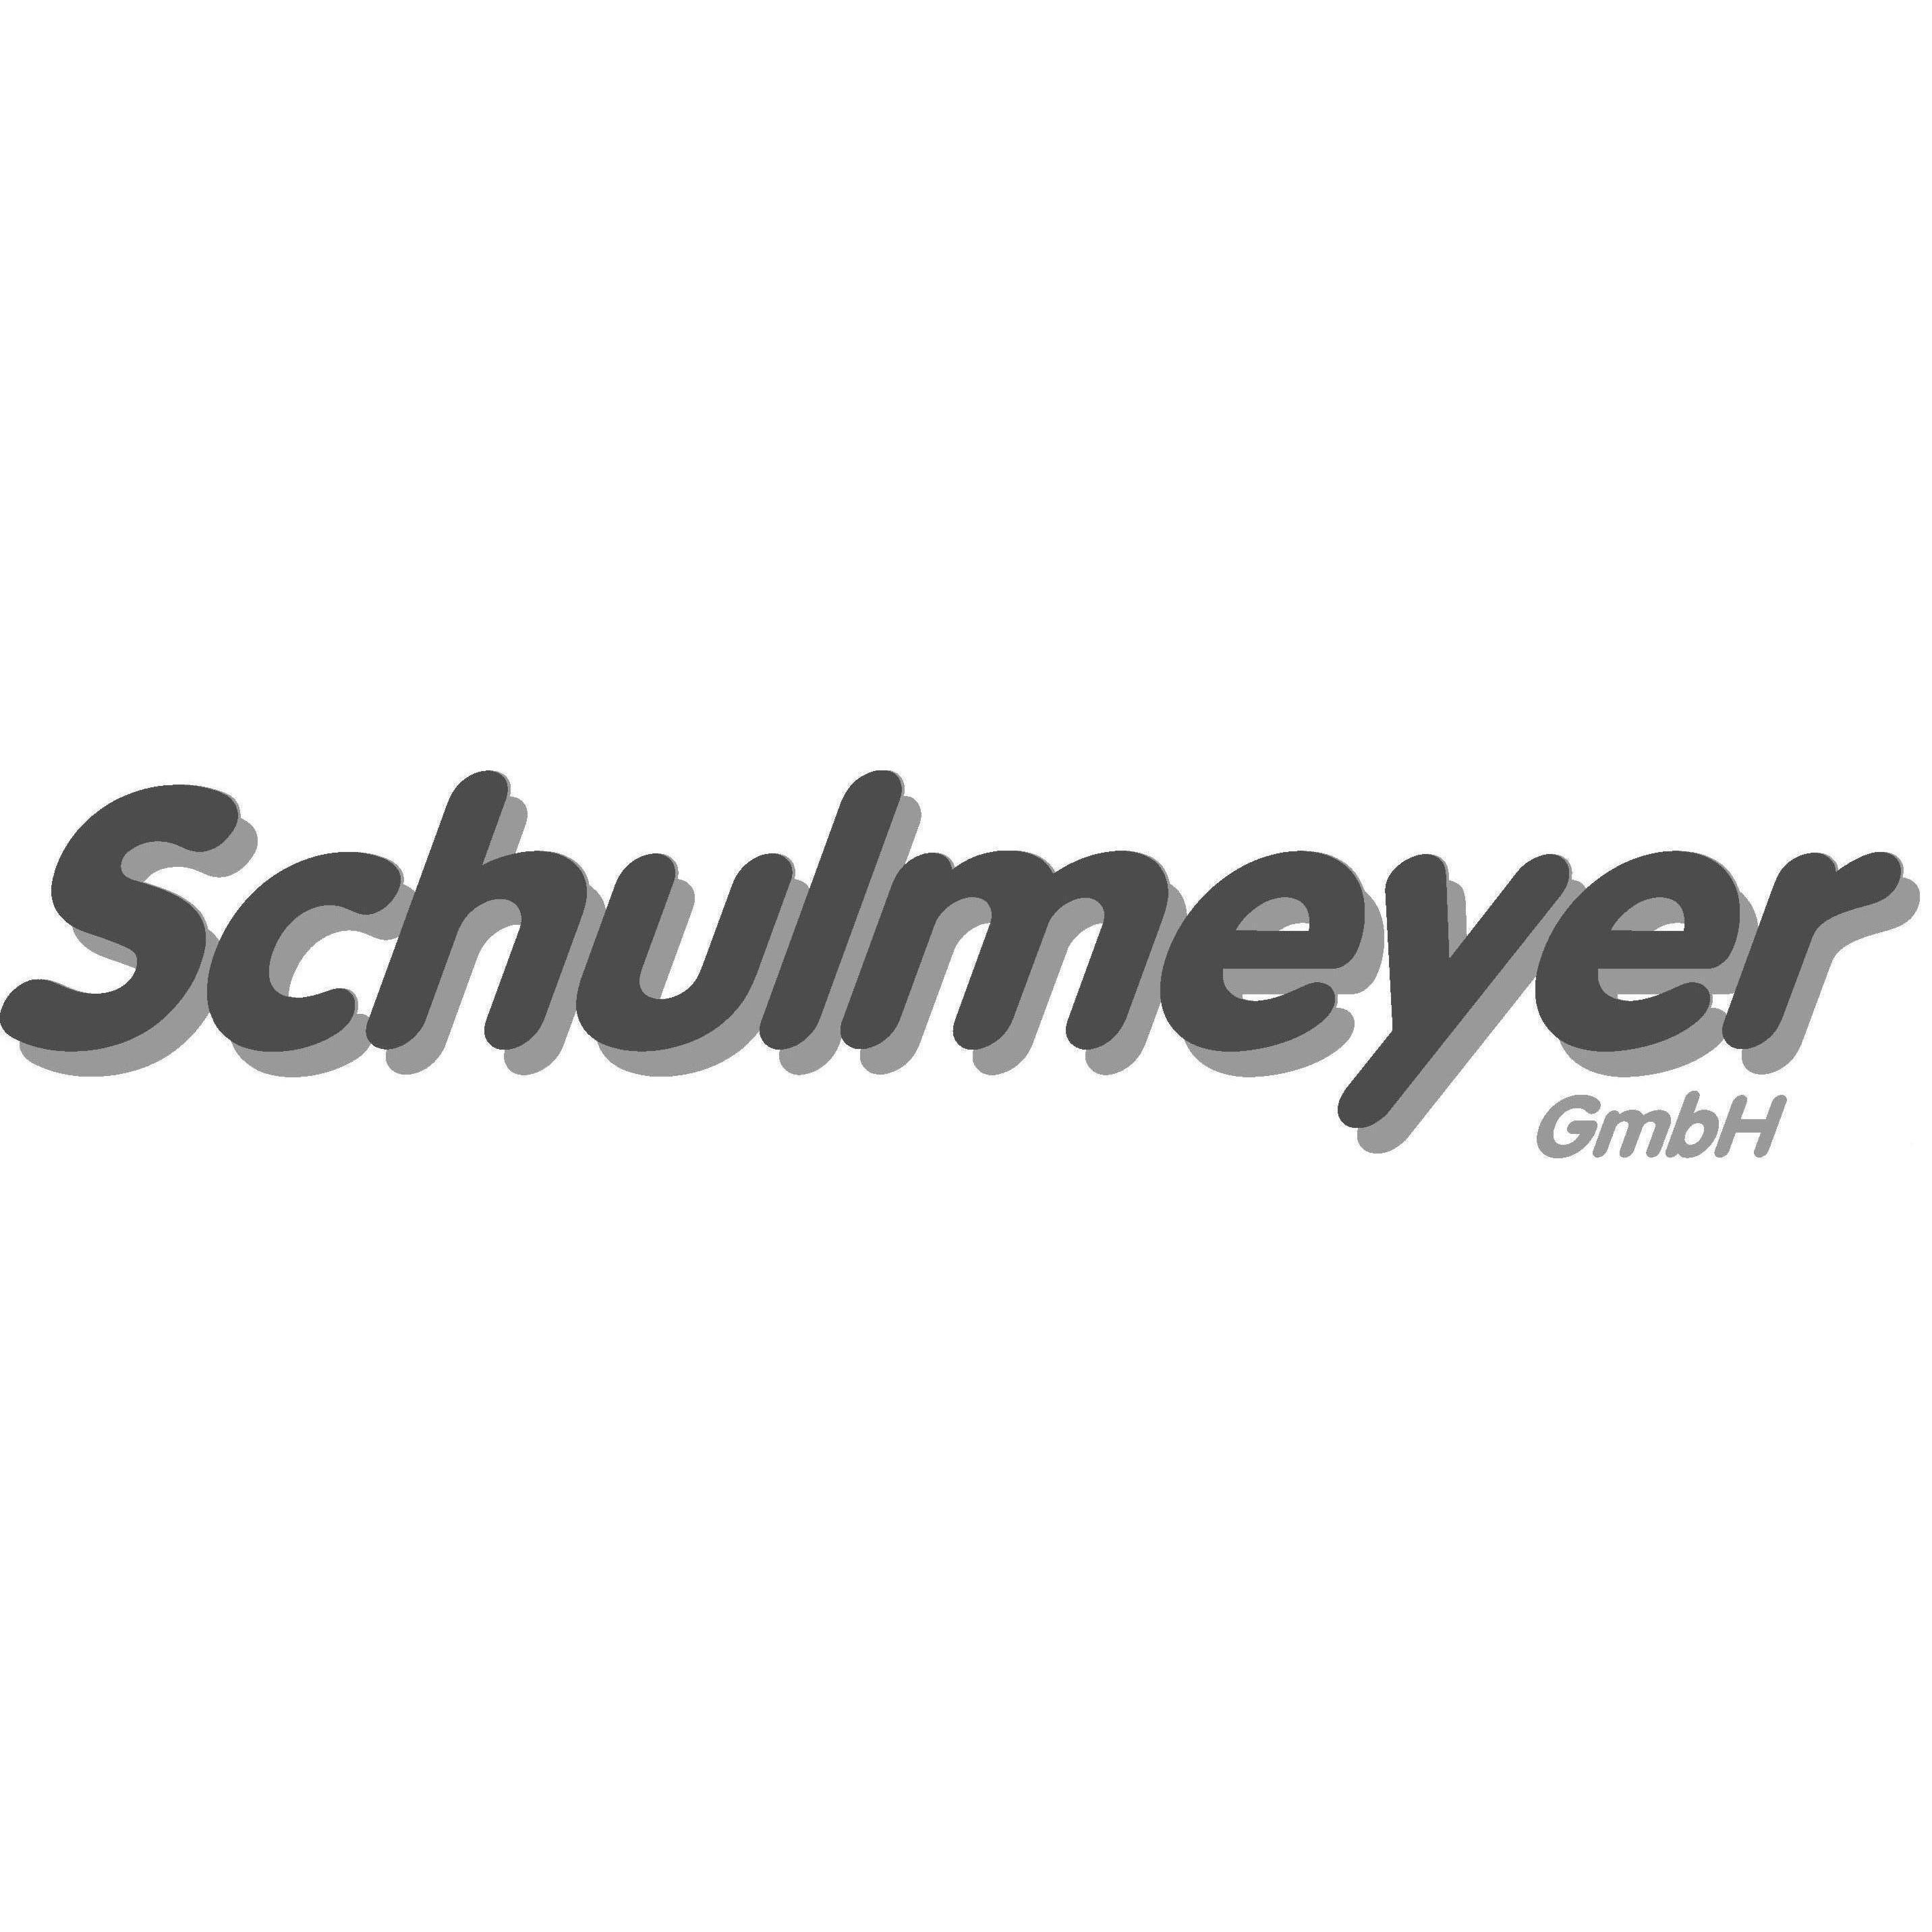 Schulmeyer GmbH in Kamp Lintfort - Logo